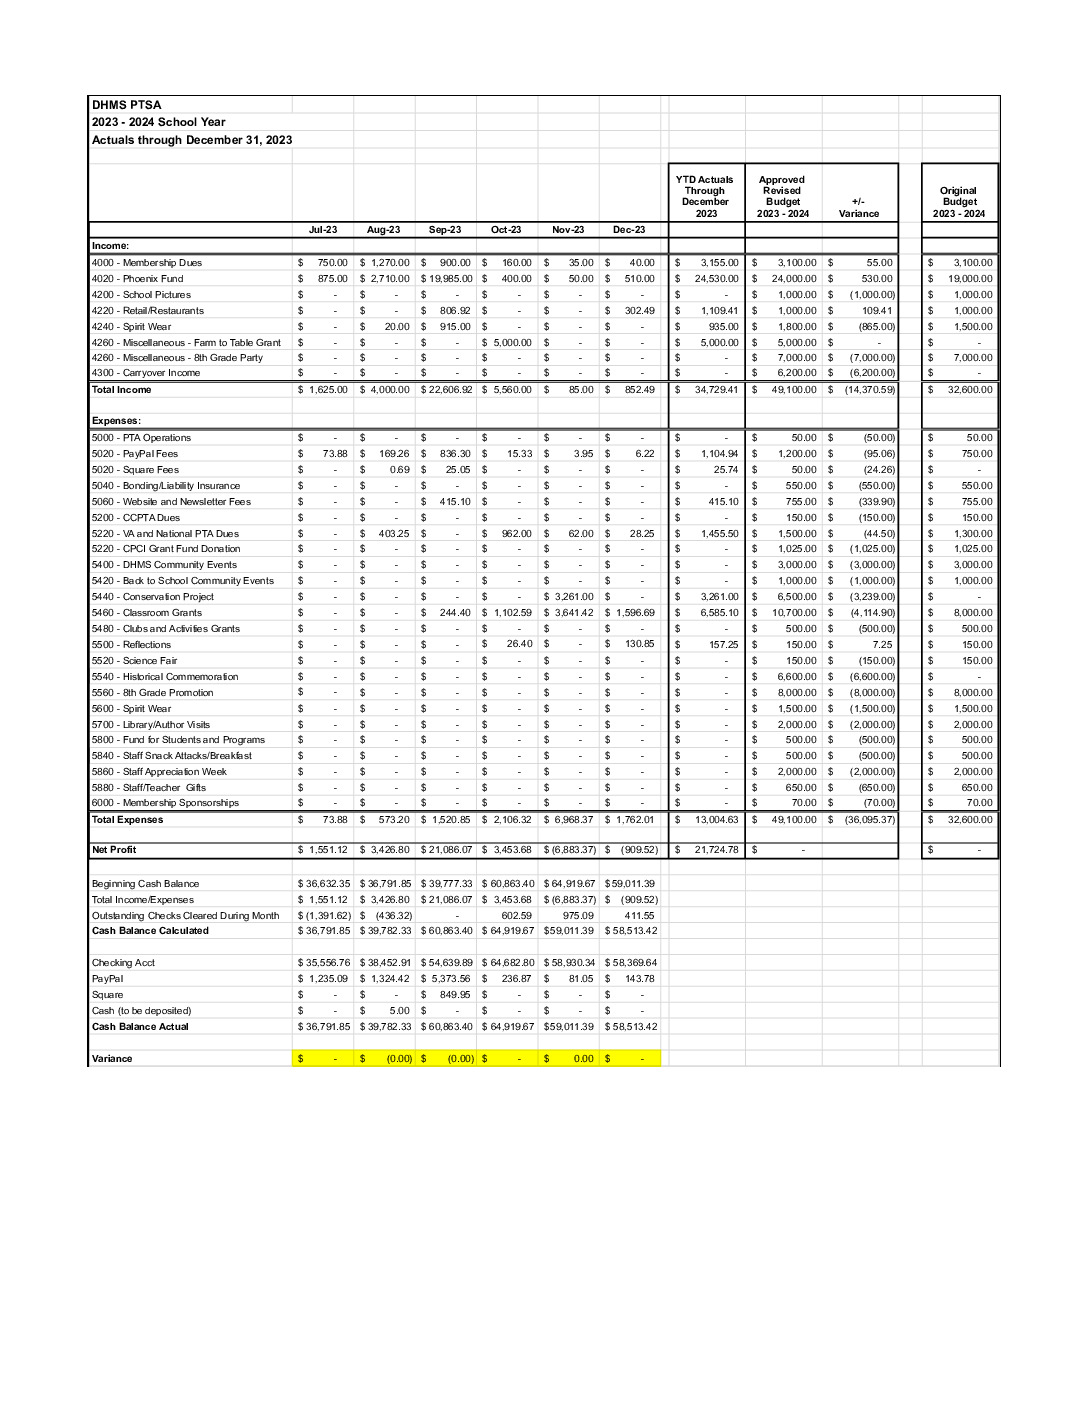 thumbnail of 202312_DHMS PTSA Budget Report December 2023